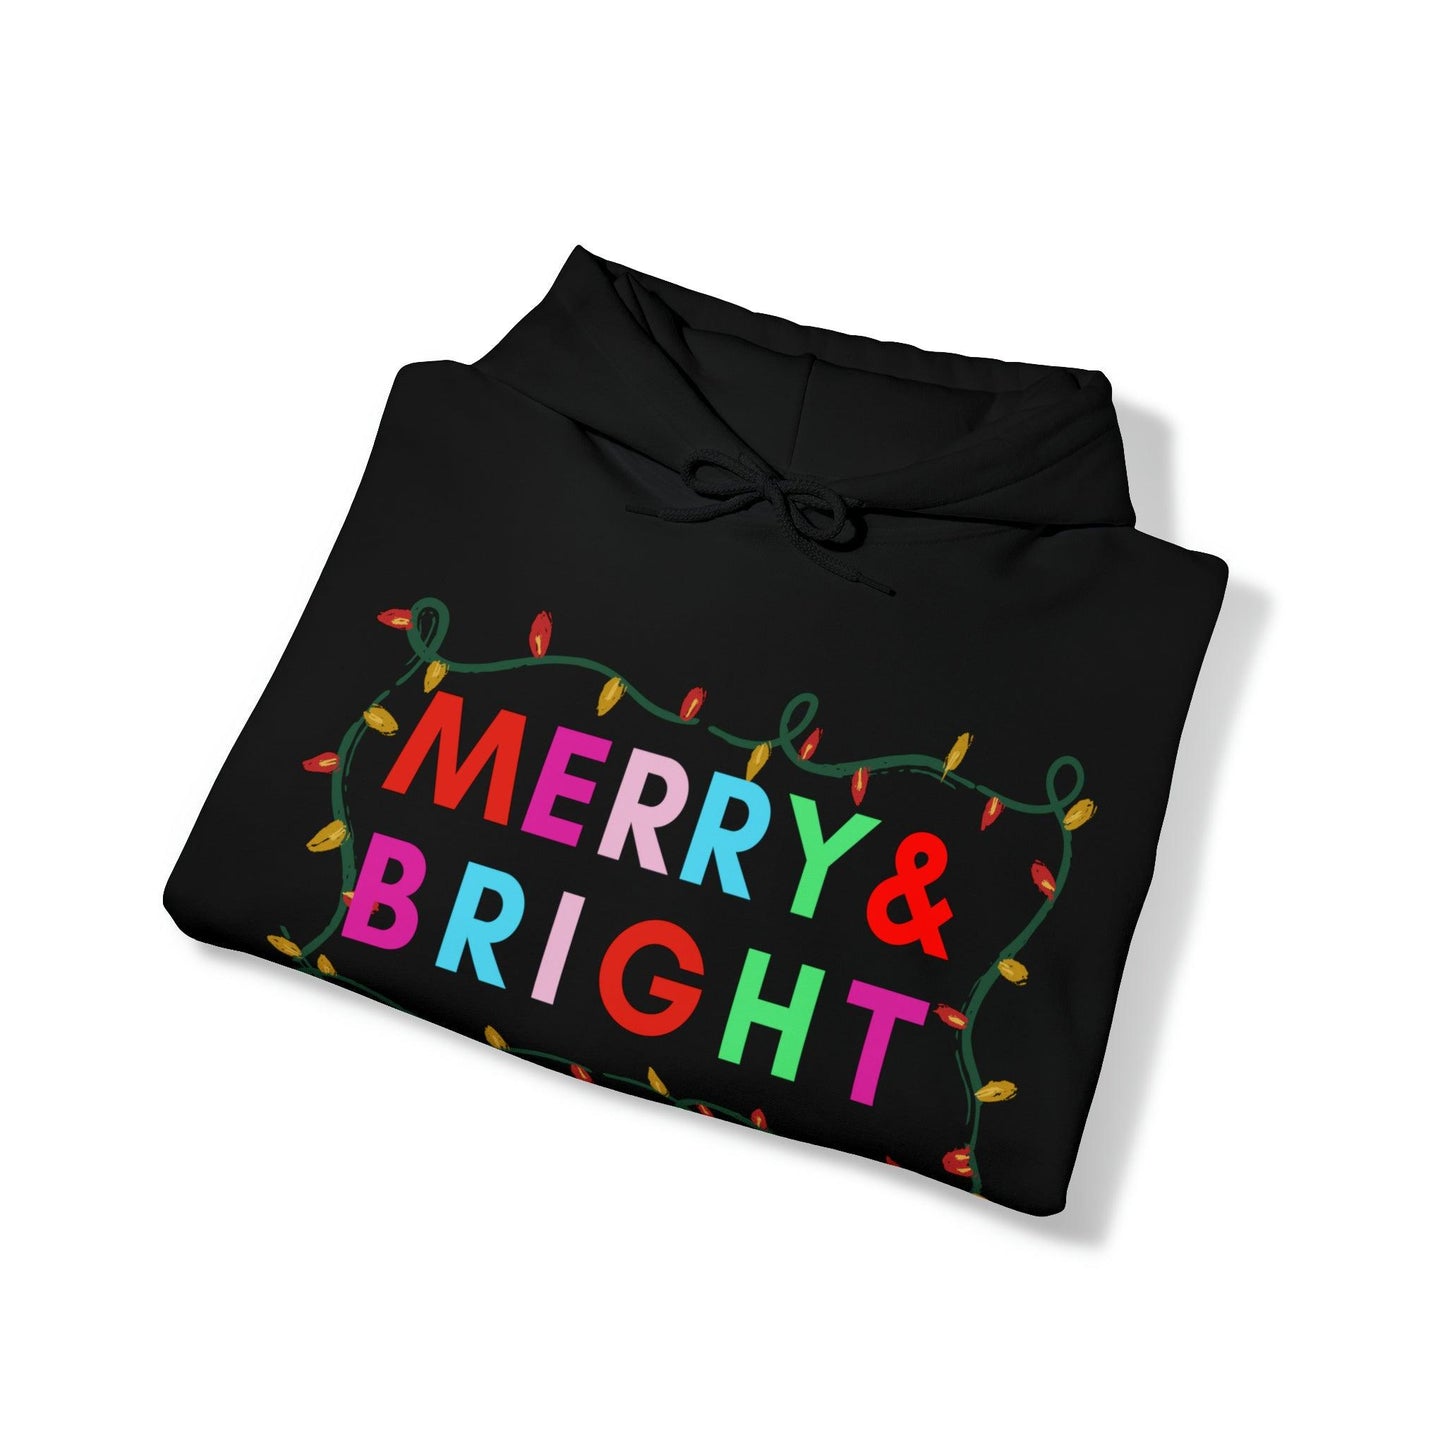 Merry and Bright Christmas Sweatshirt Merry and Bright Hooded Sweatshirt Christmas Sweater Christmas Pullover Christmas Shirt - Giftsmojo